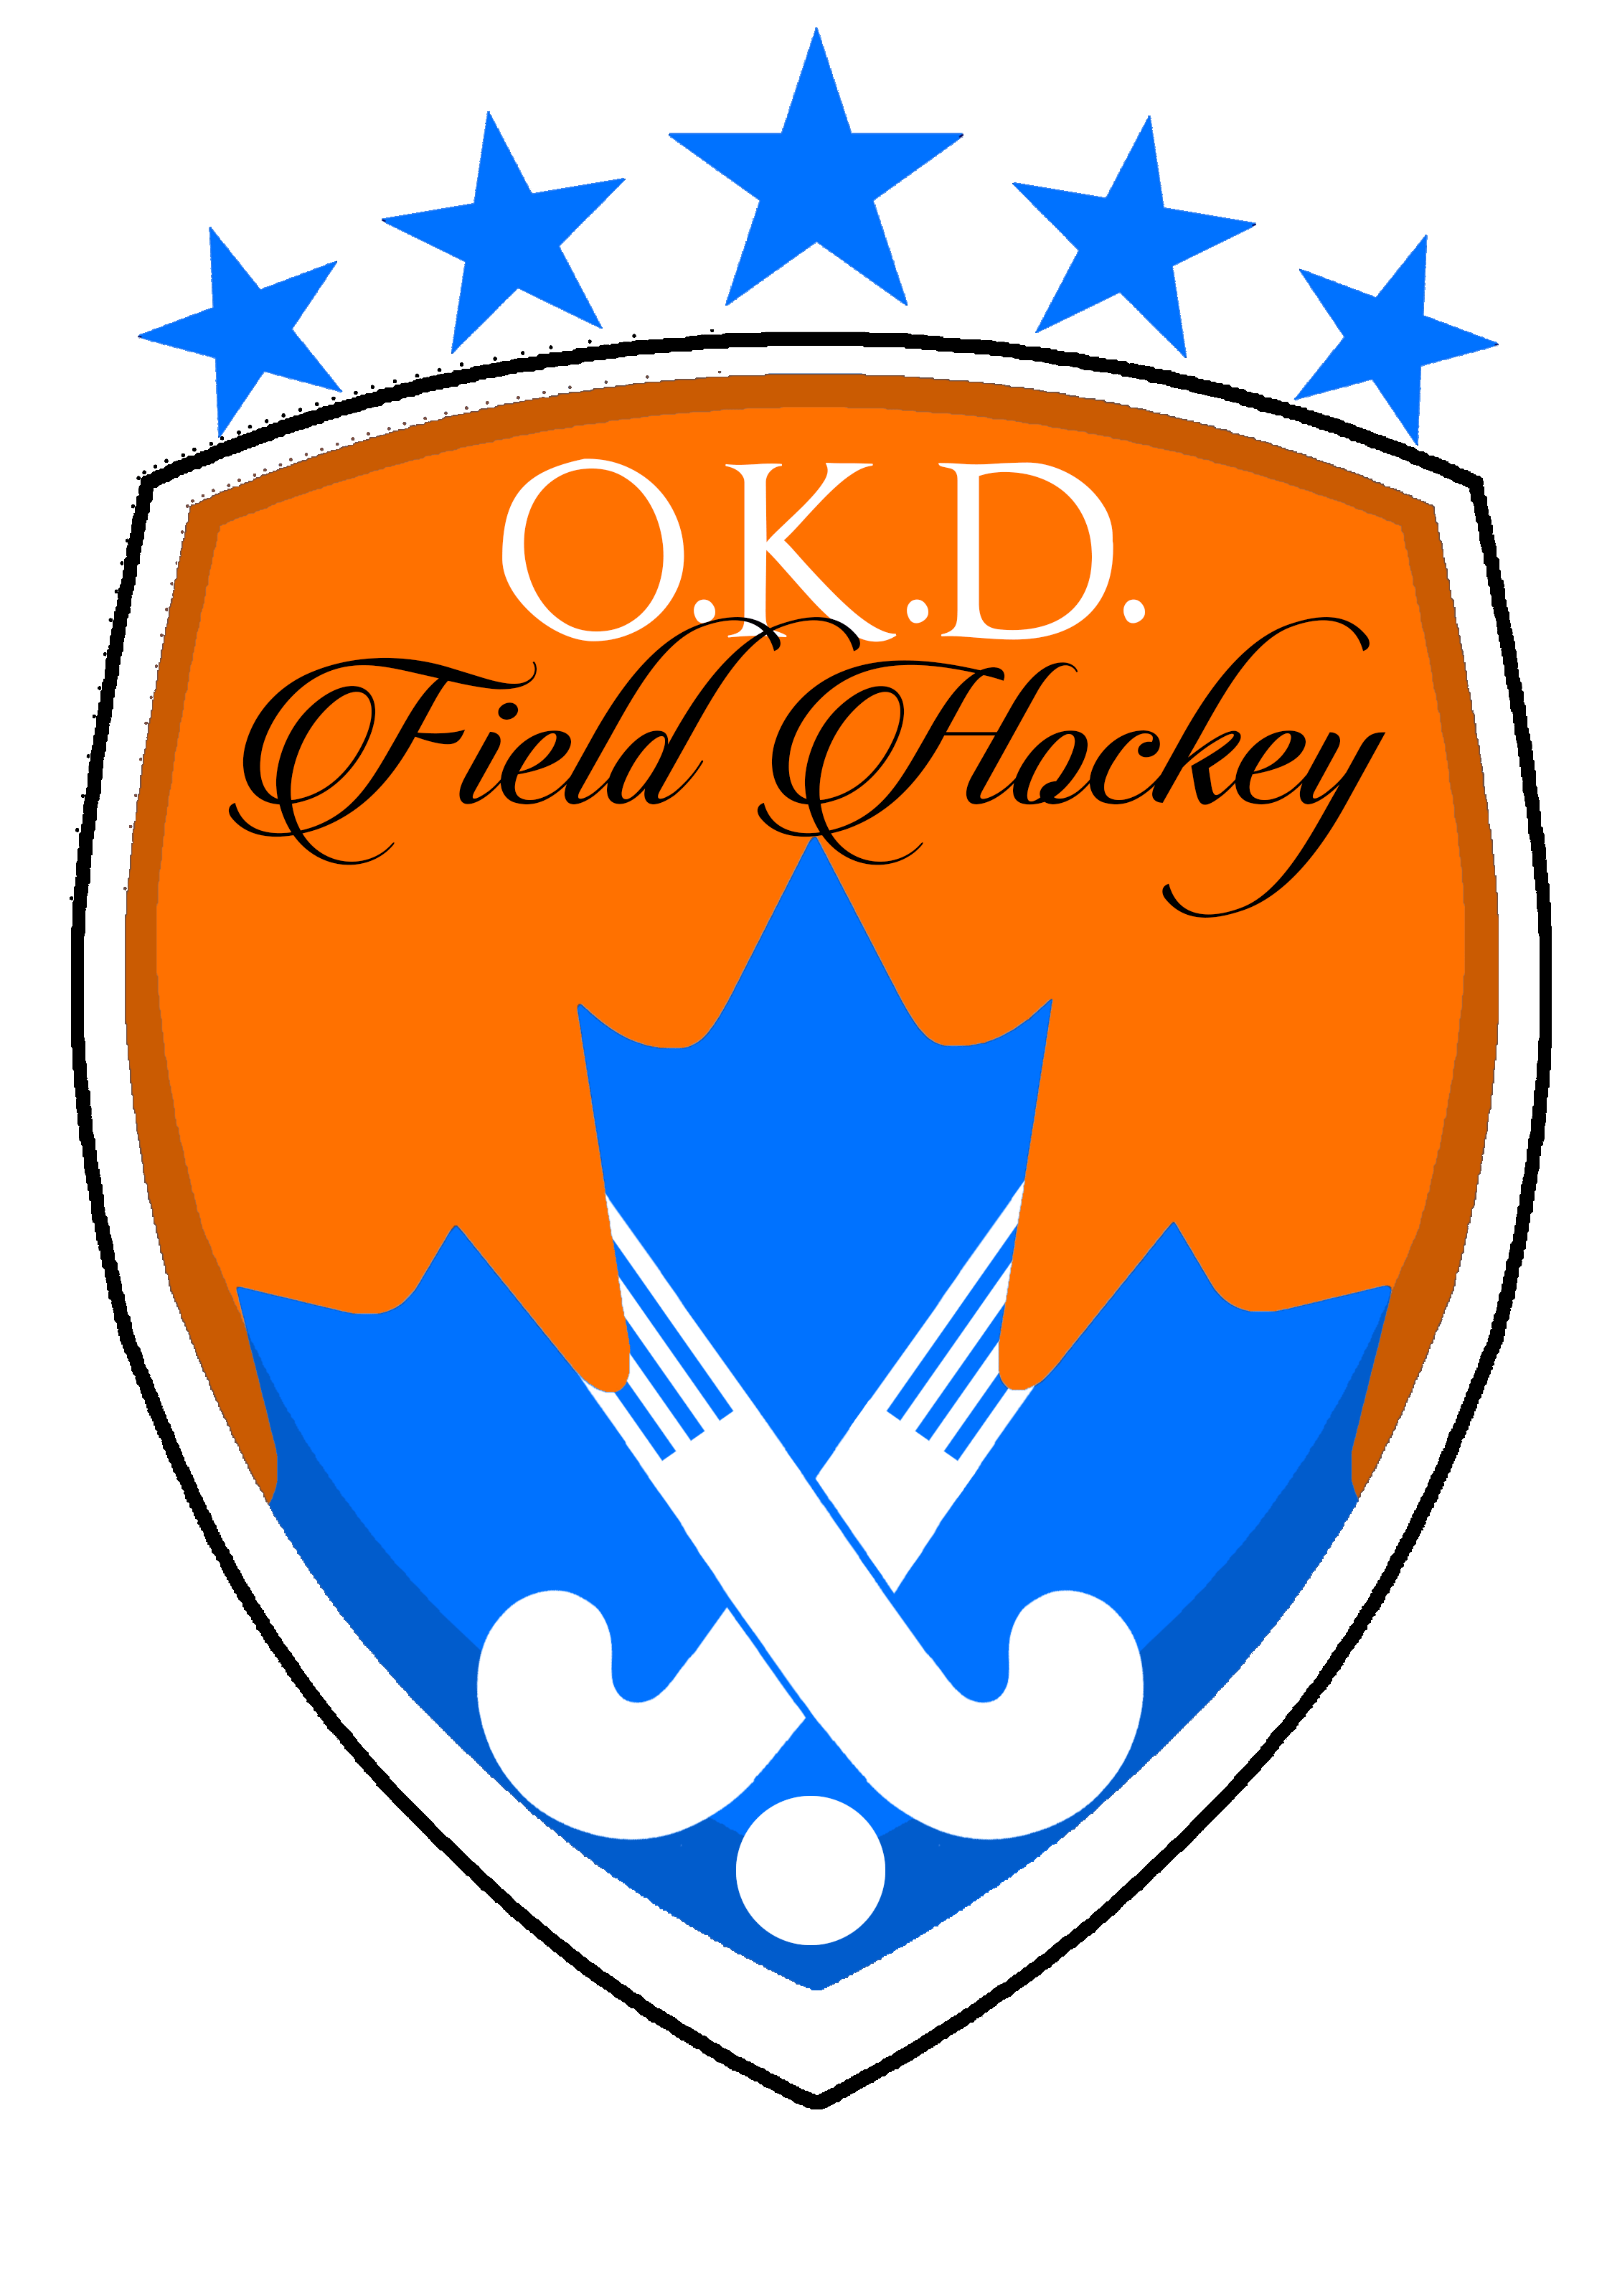 OKD Field Hockey Logo PNG images